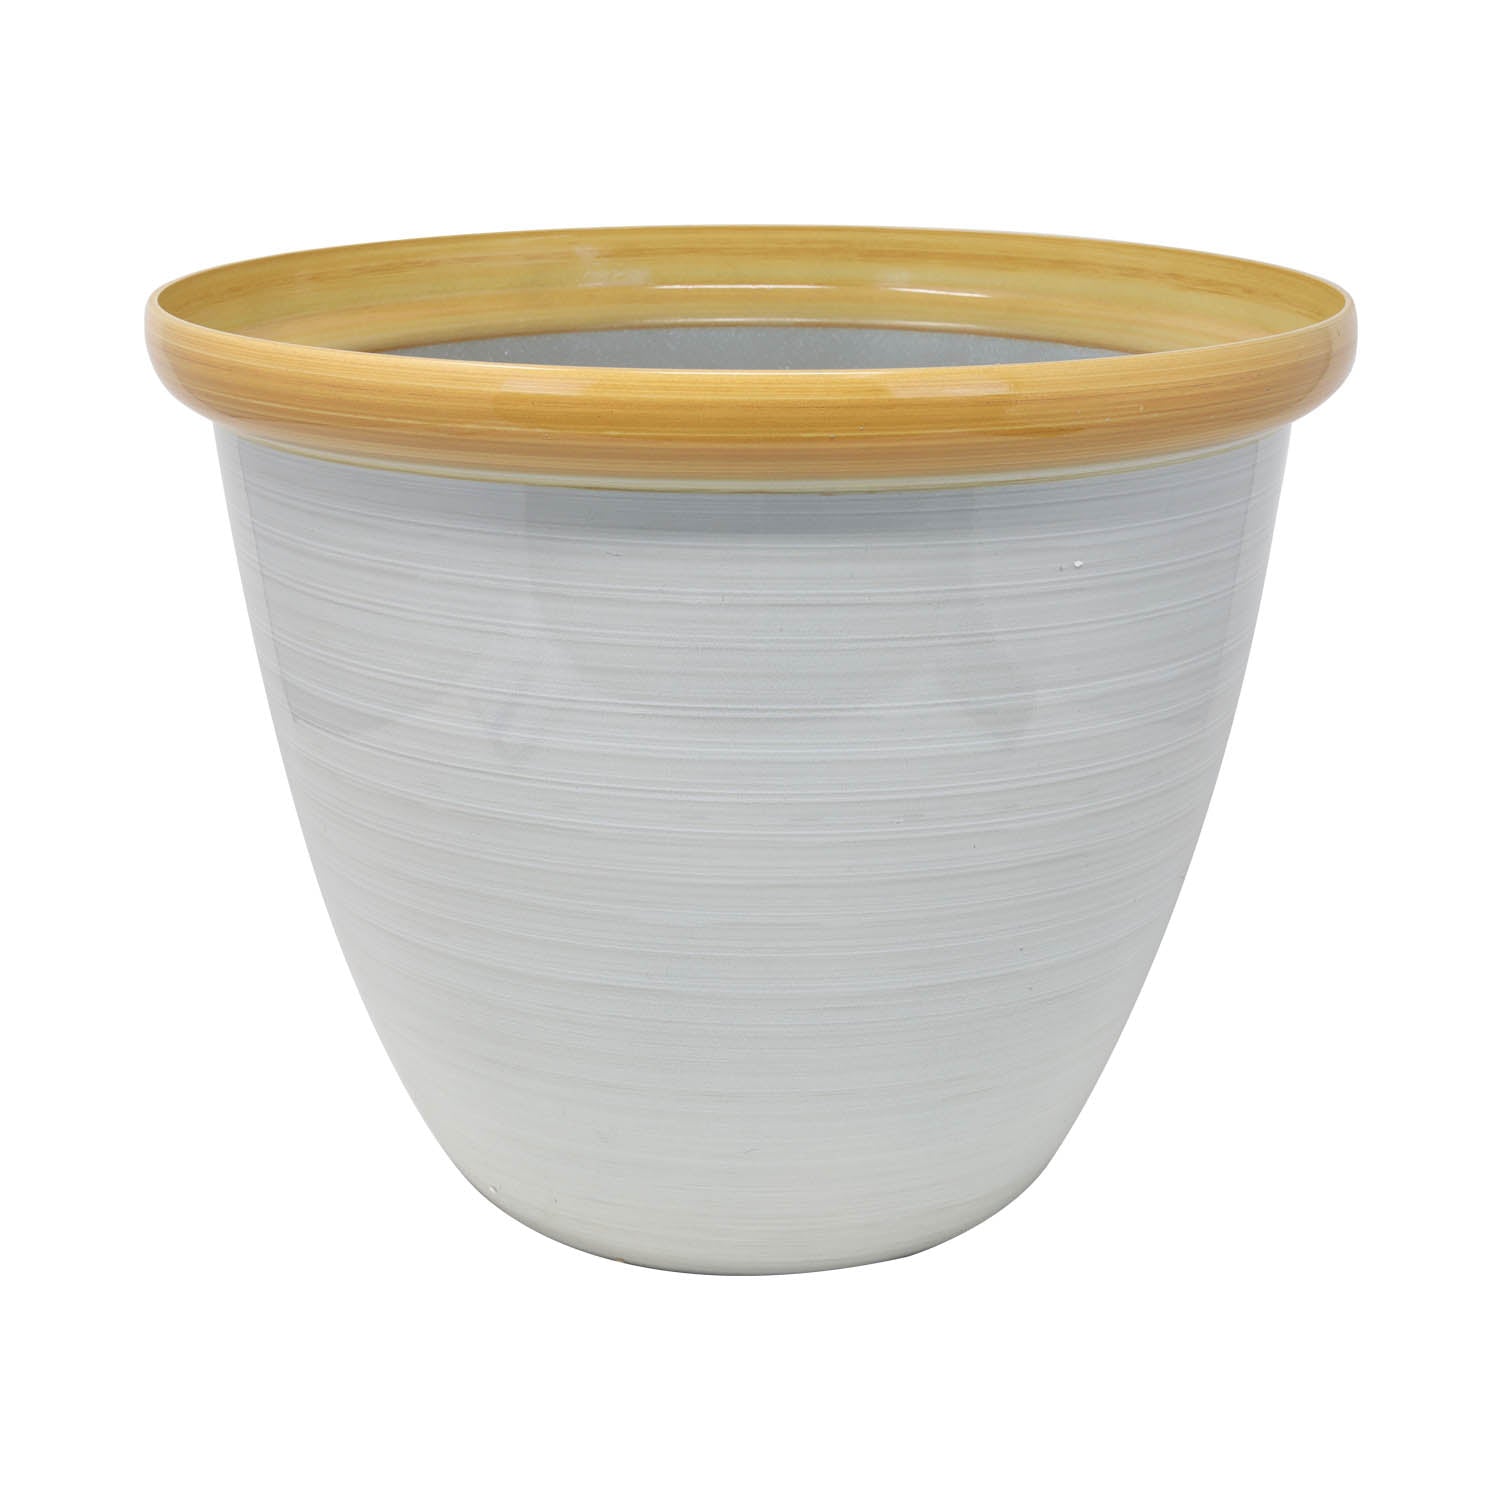 40cm Gloss Cream Beige Round Plastic Honey Pot Planter